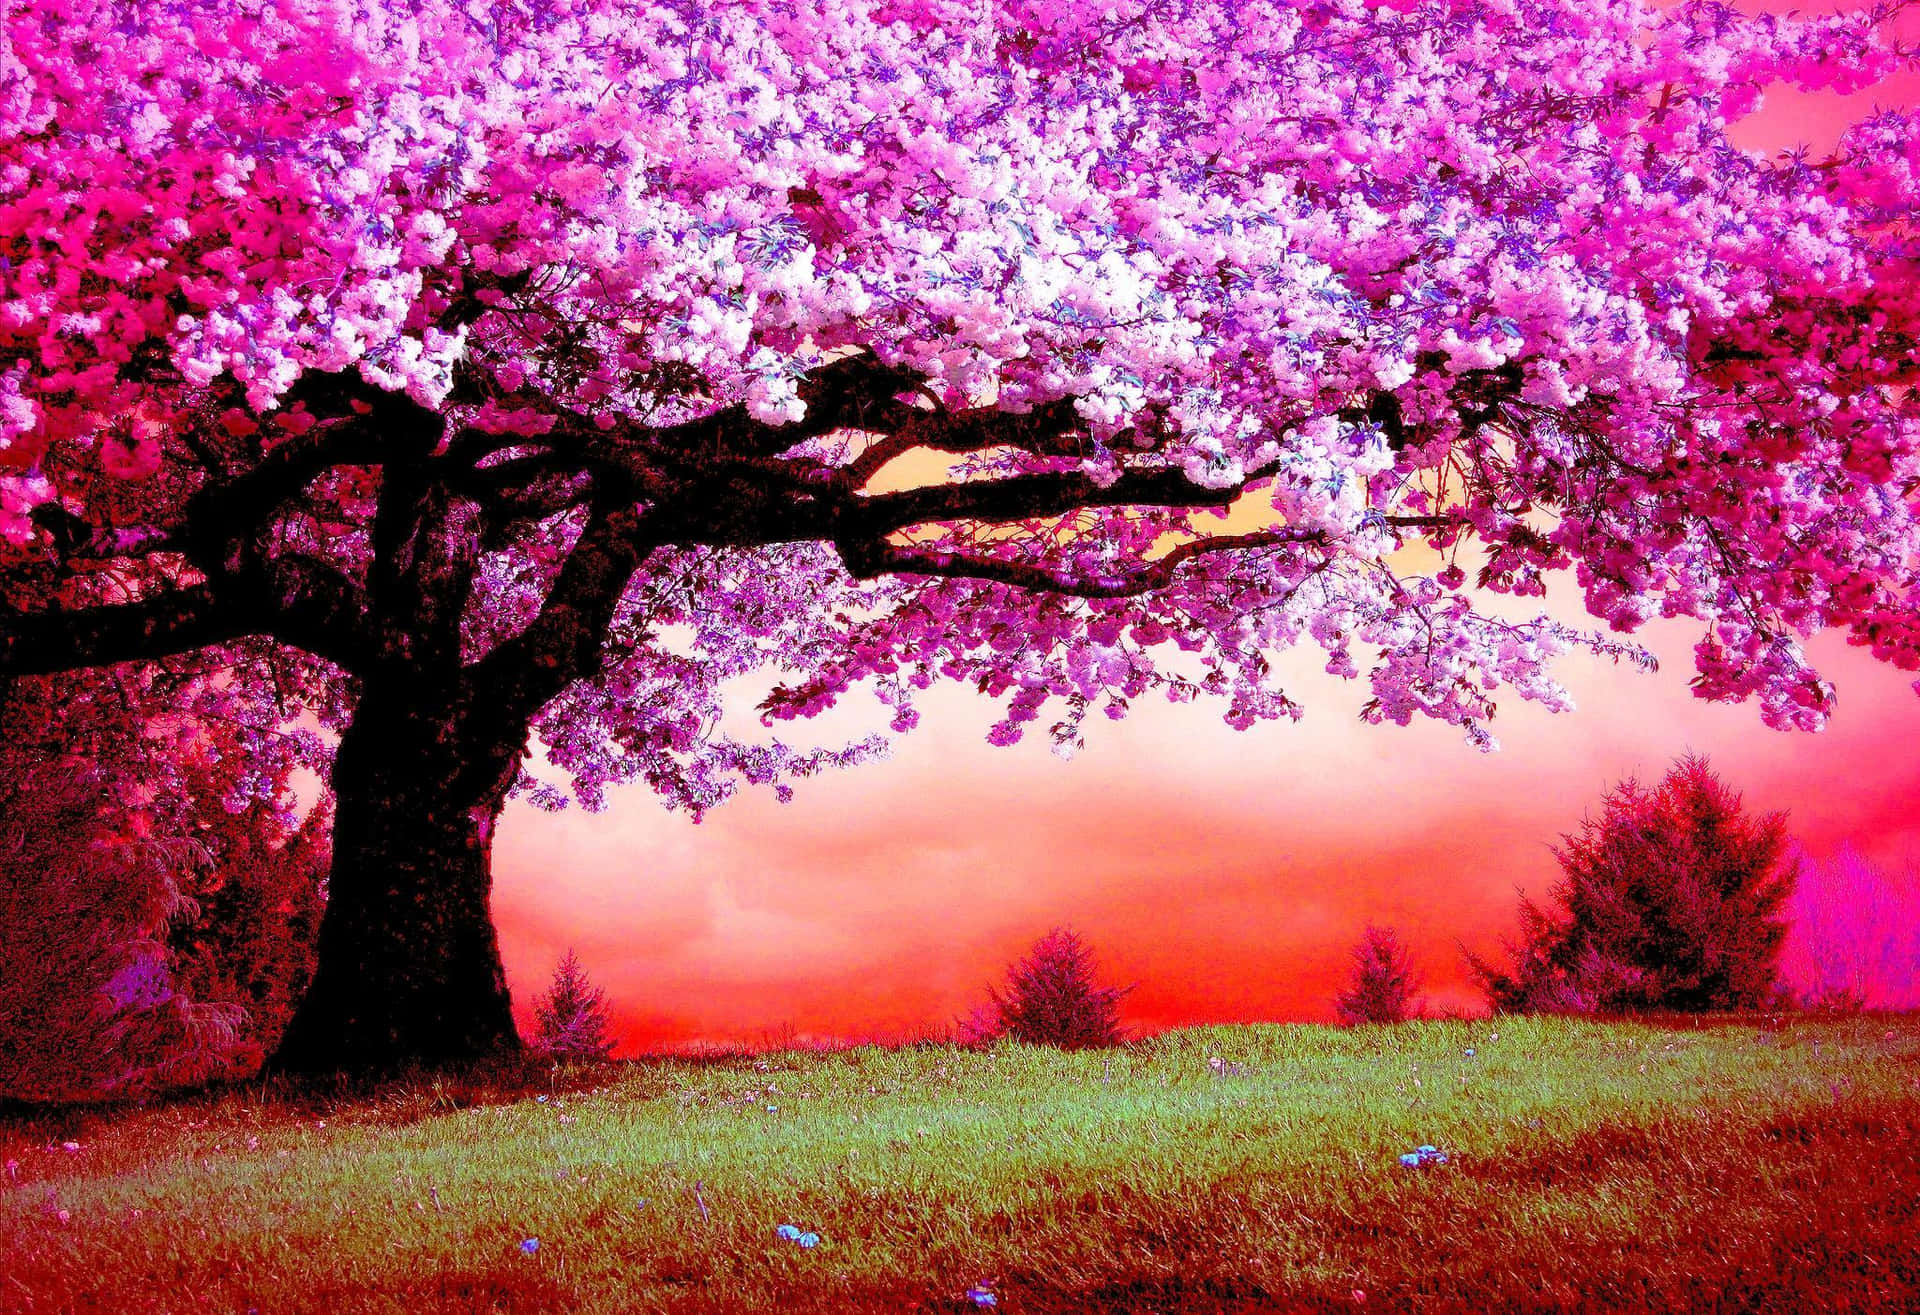 Stunning Pink Trees in a Dreamlike Setting Wallpaper